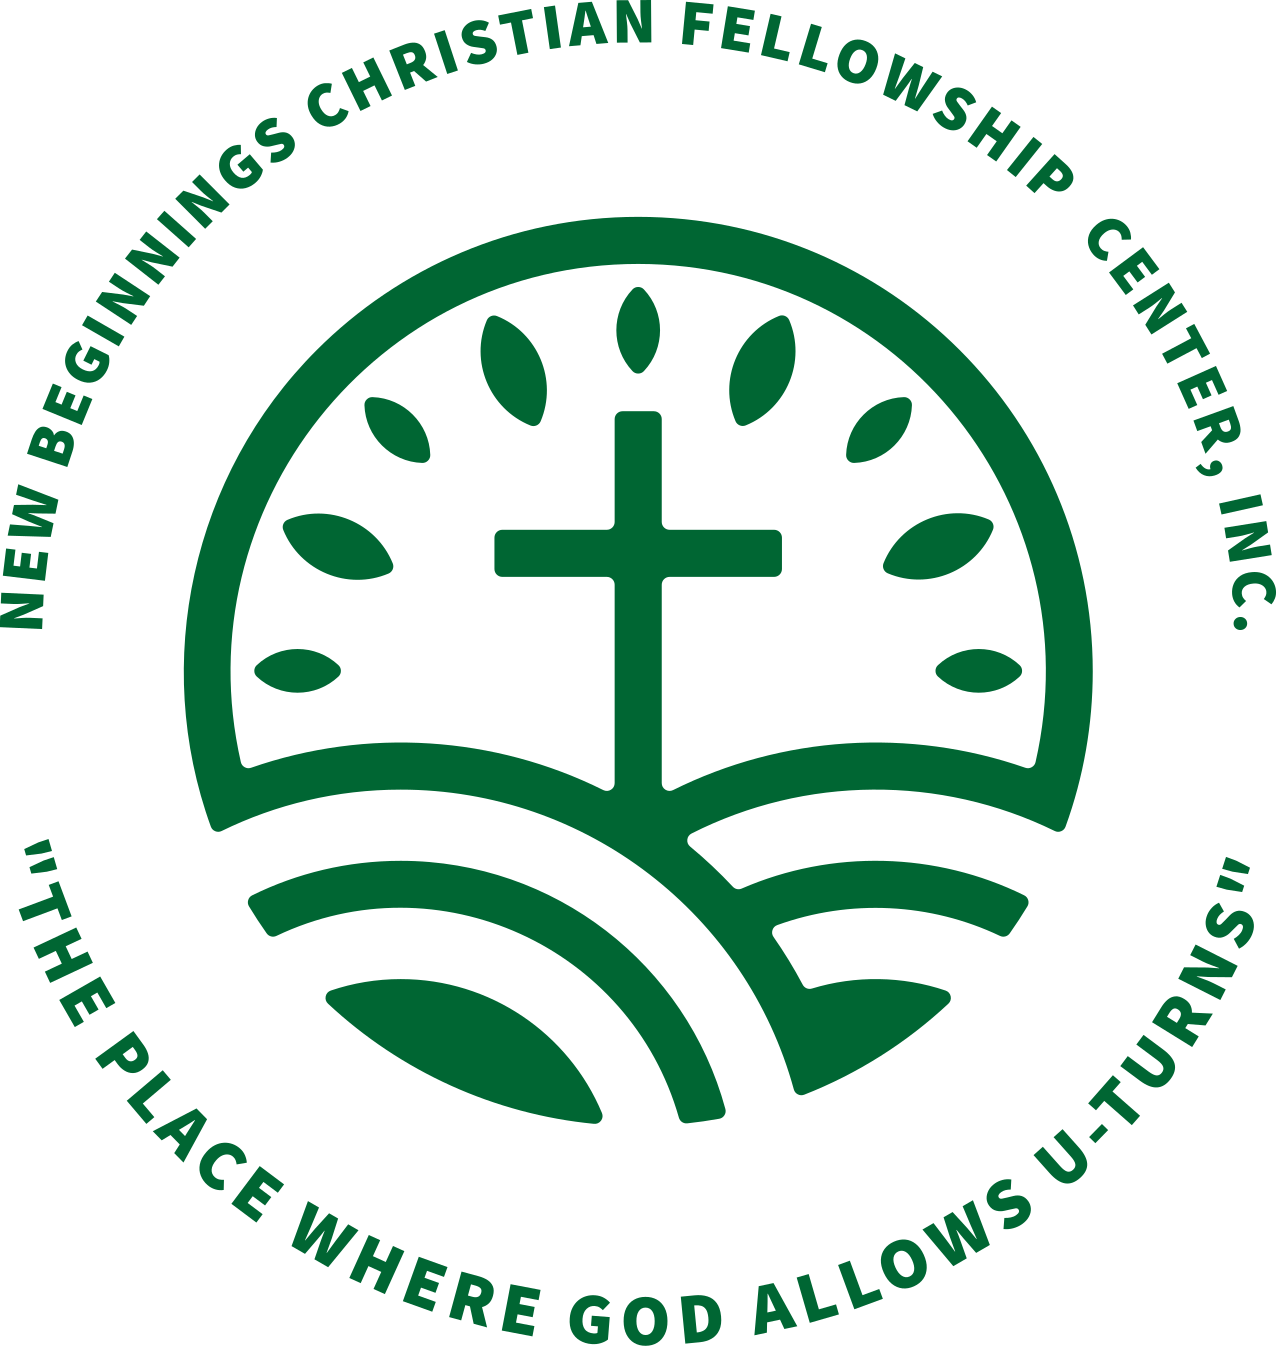 NEW BEGINNINGS CHRISTIAN FELLOWSHIP  CENTER, INC.'s logo